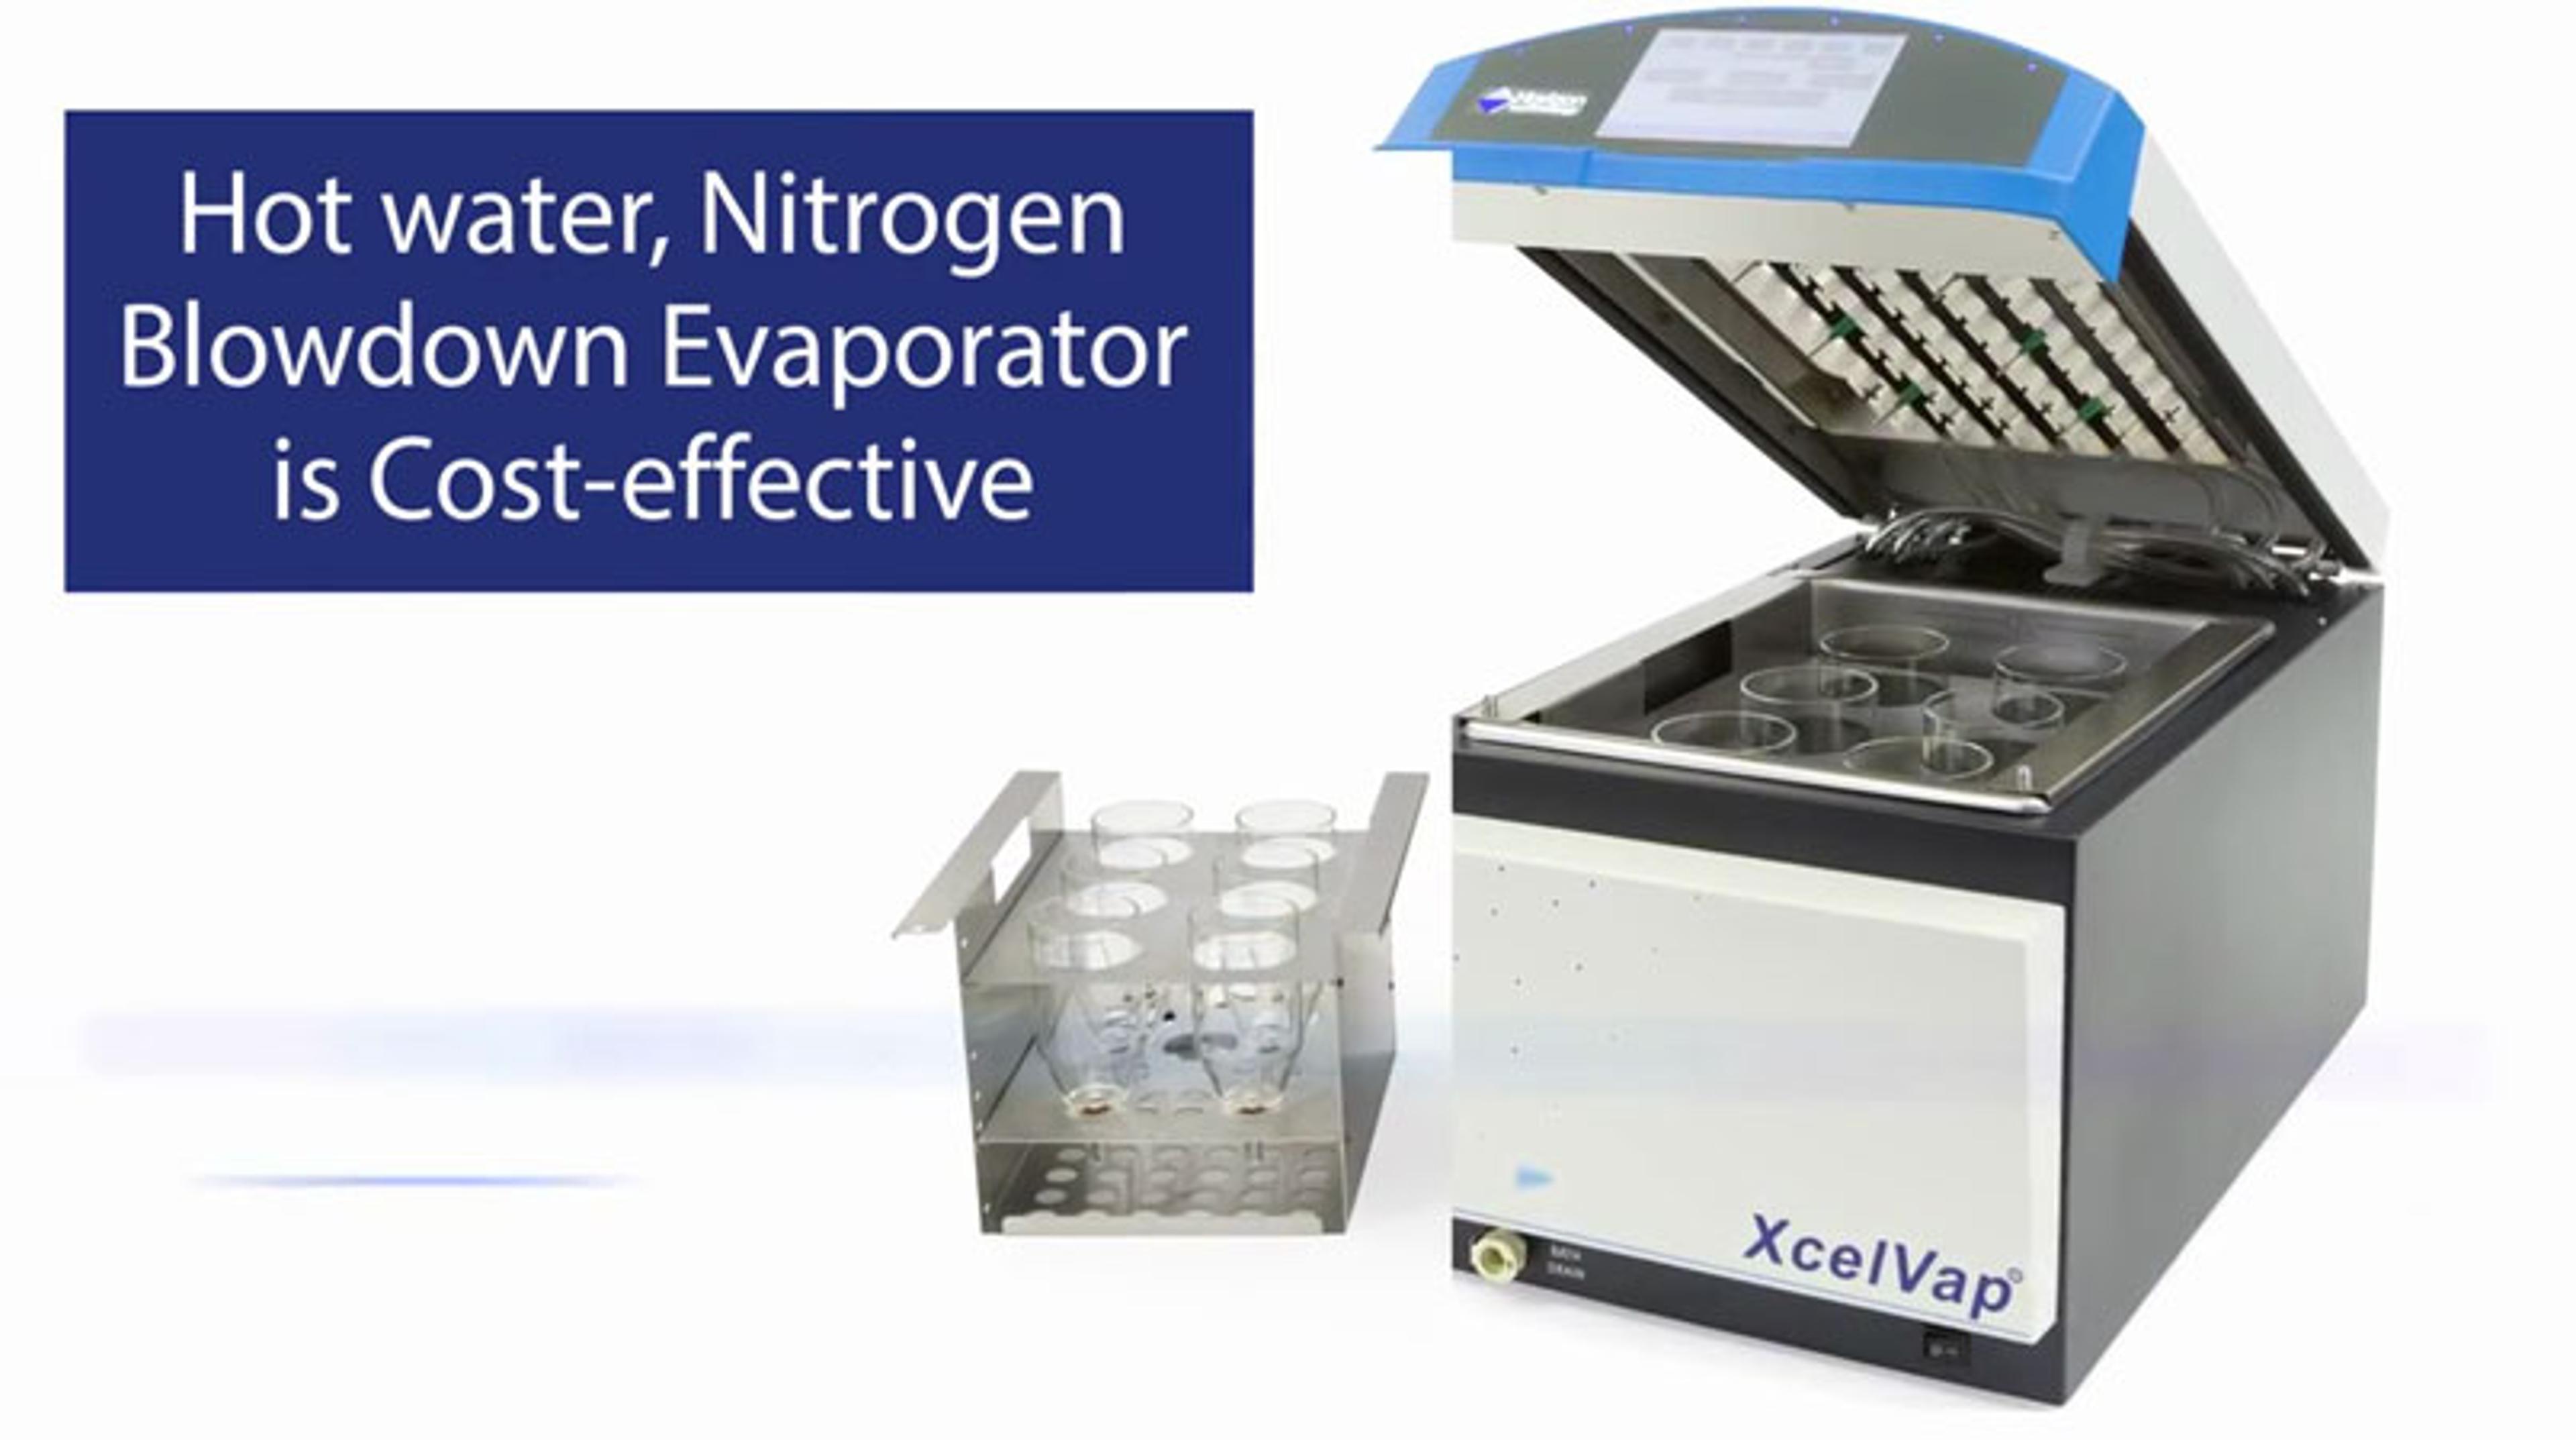 Introducing the XcelVap® Evaporator System